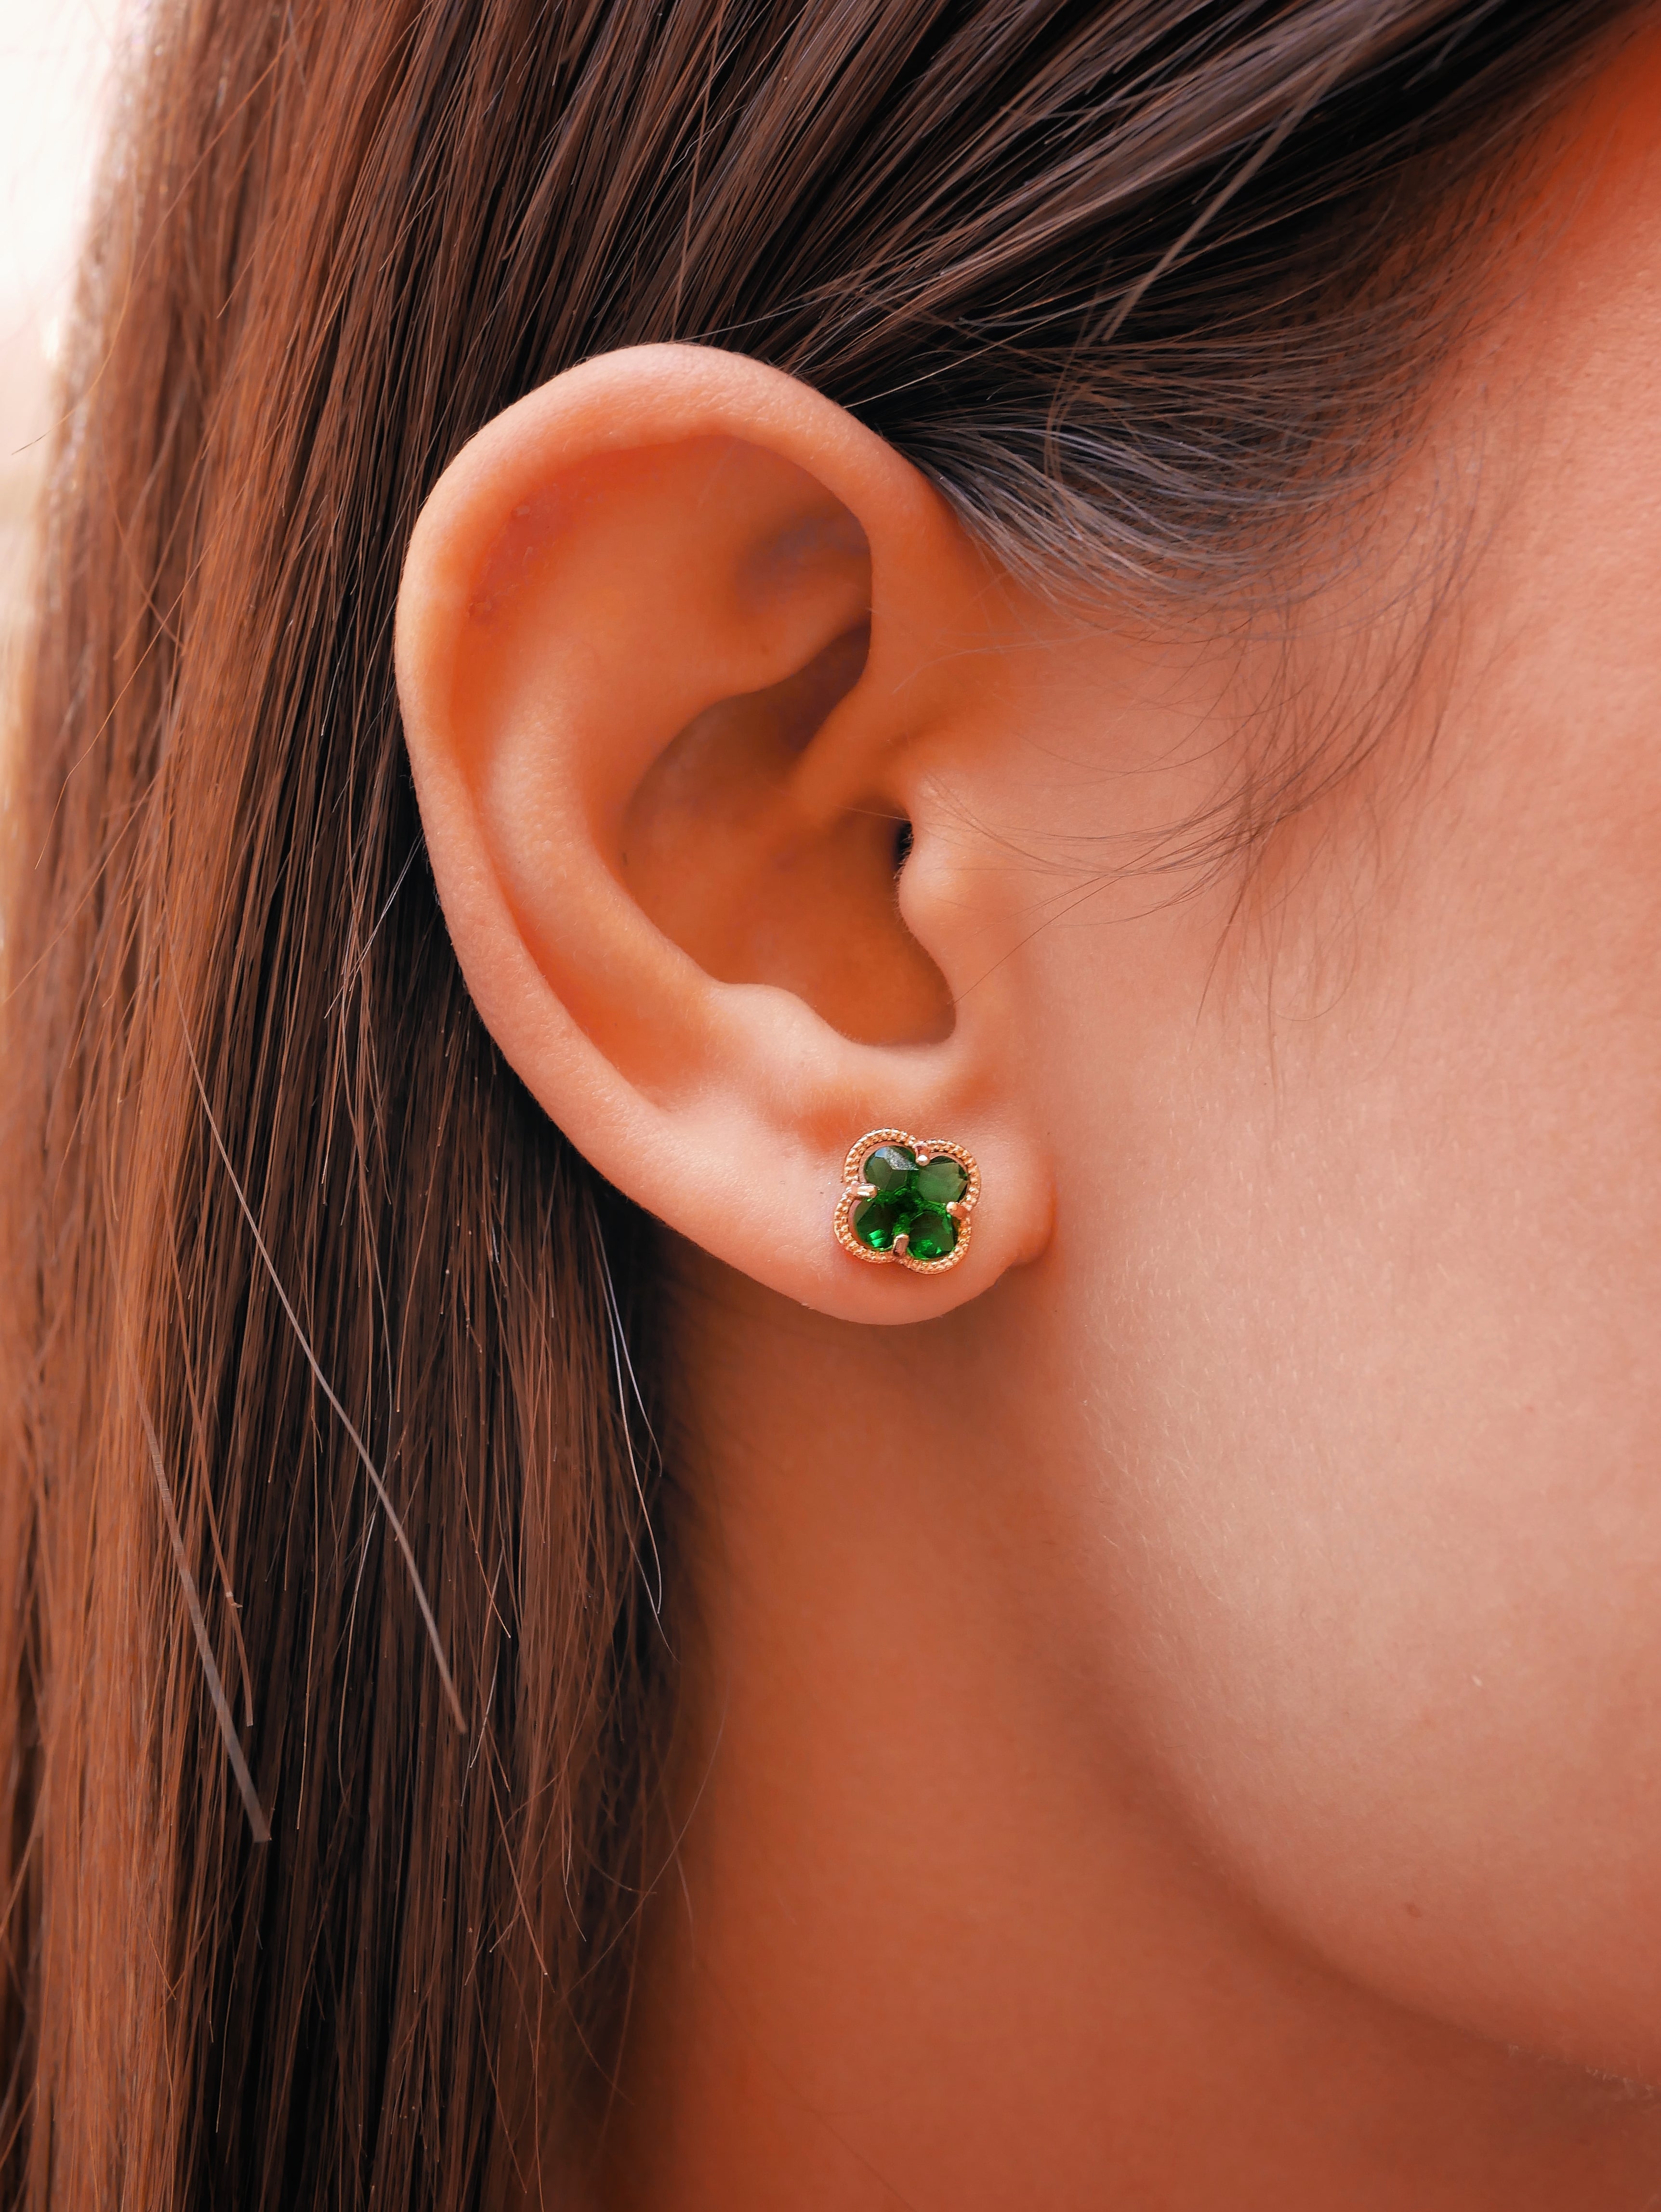 Clover earrings with emerald quartz